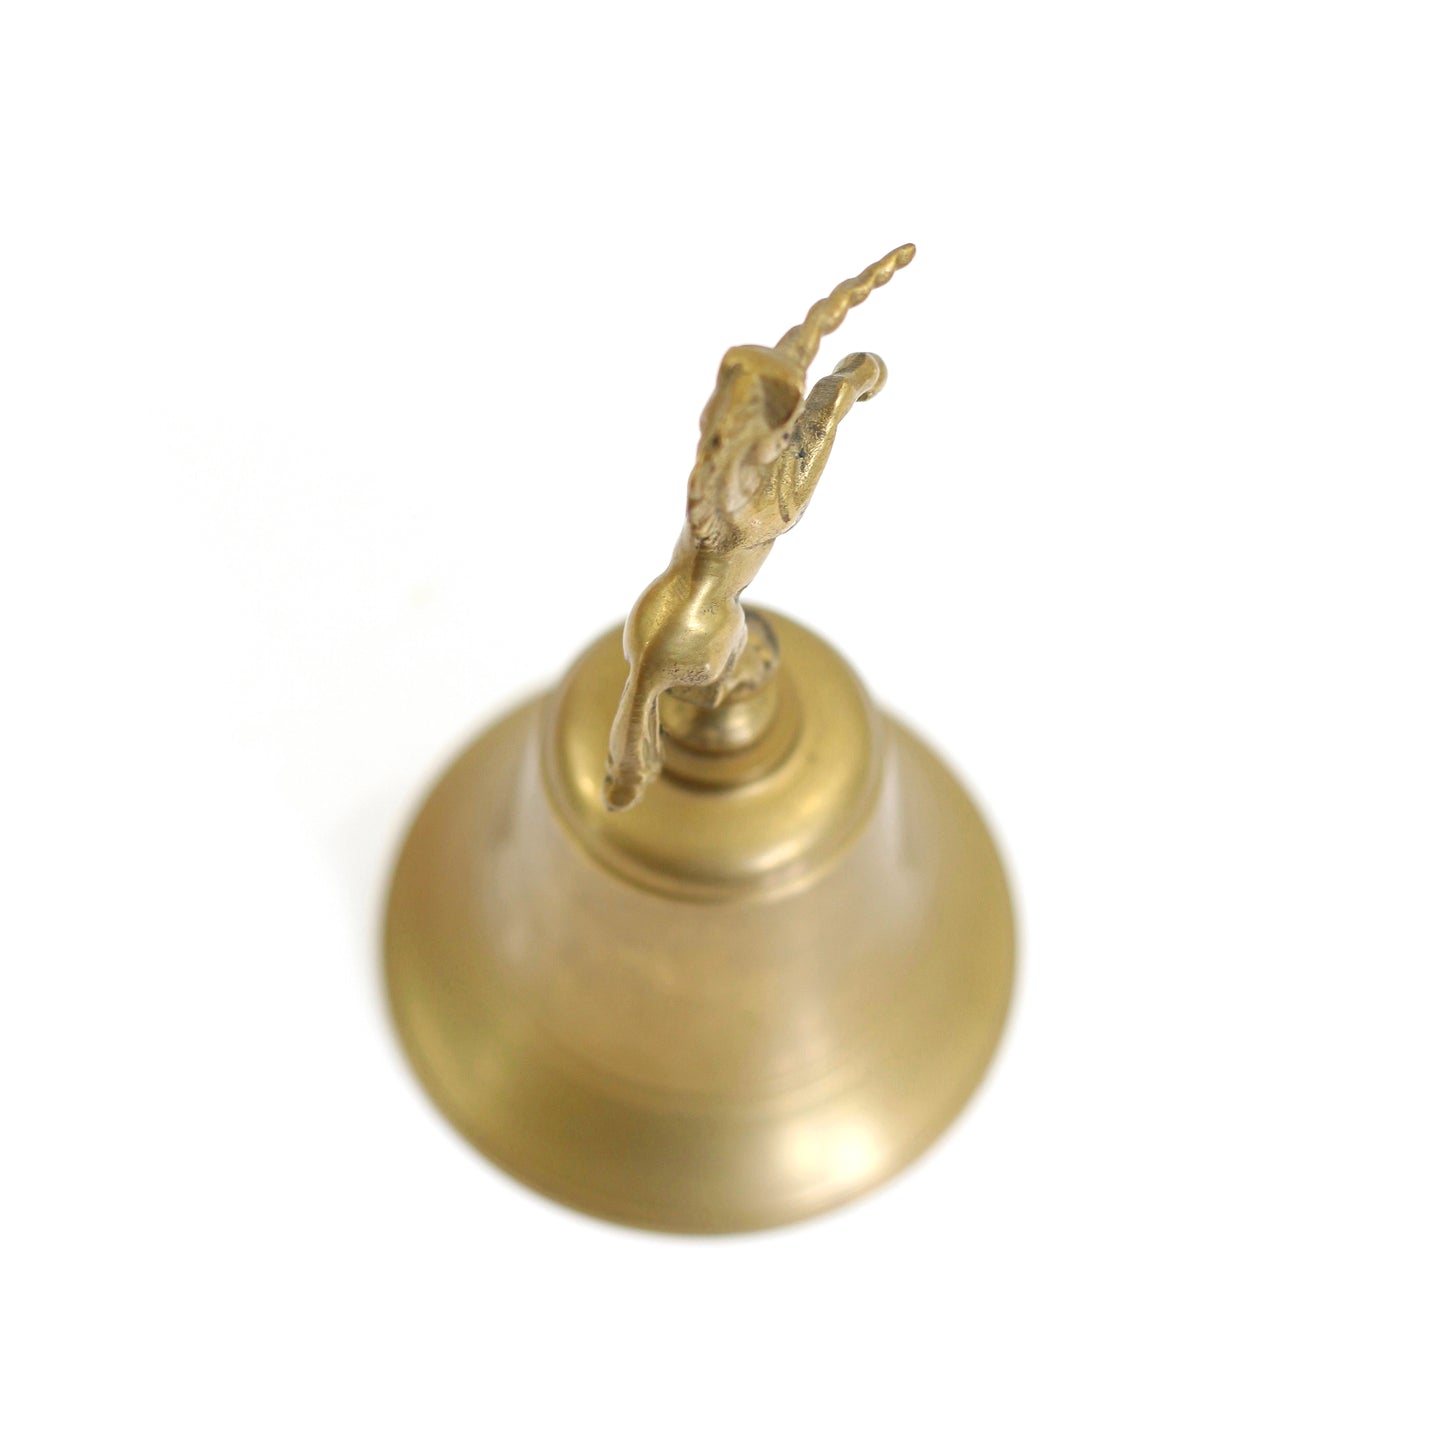 SOLD - Vintage Brass Unicorn Bell